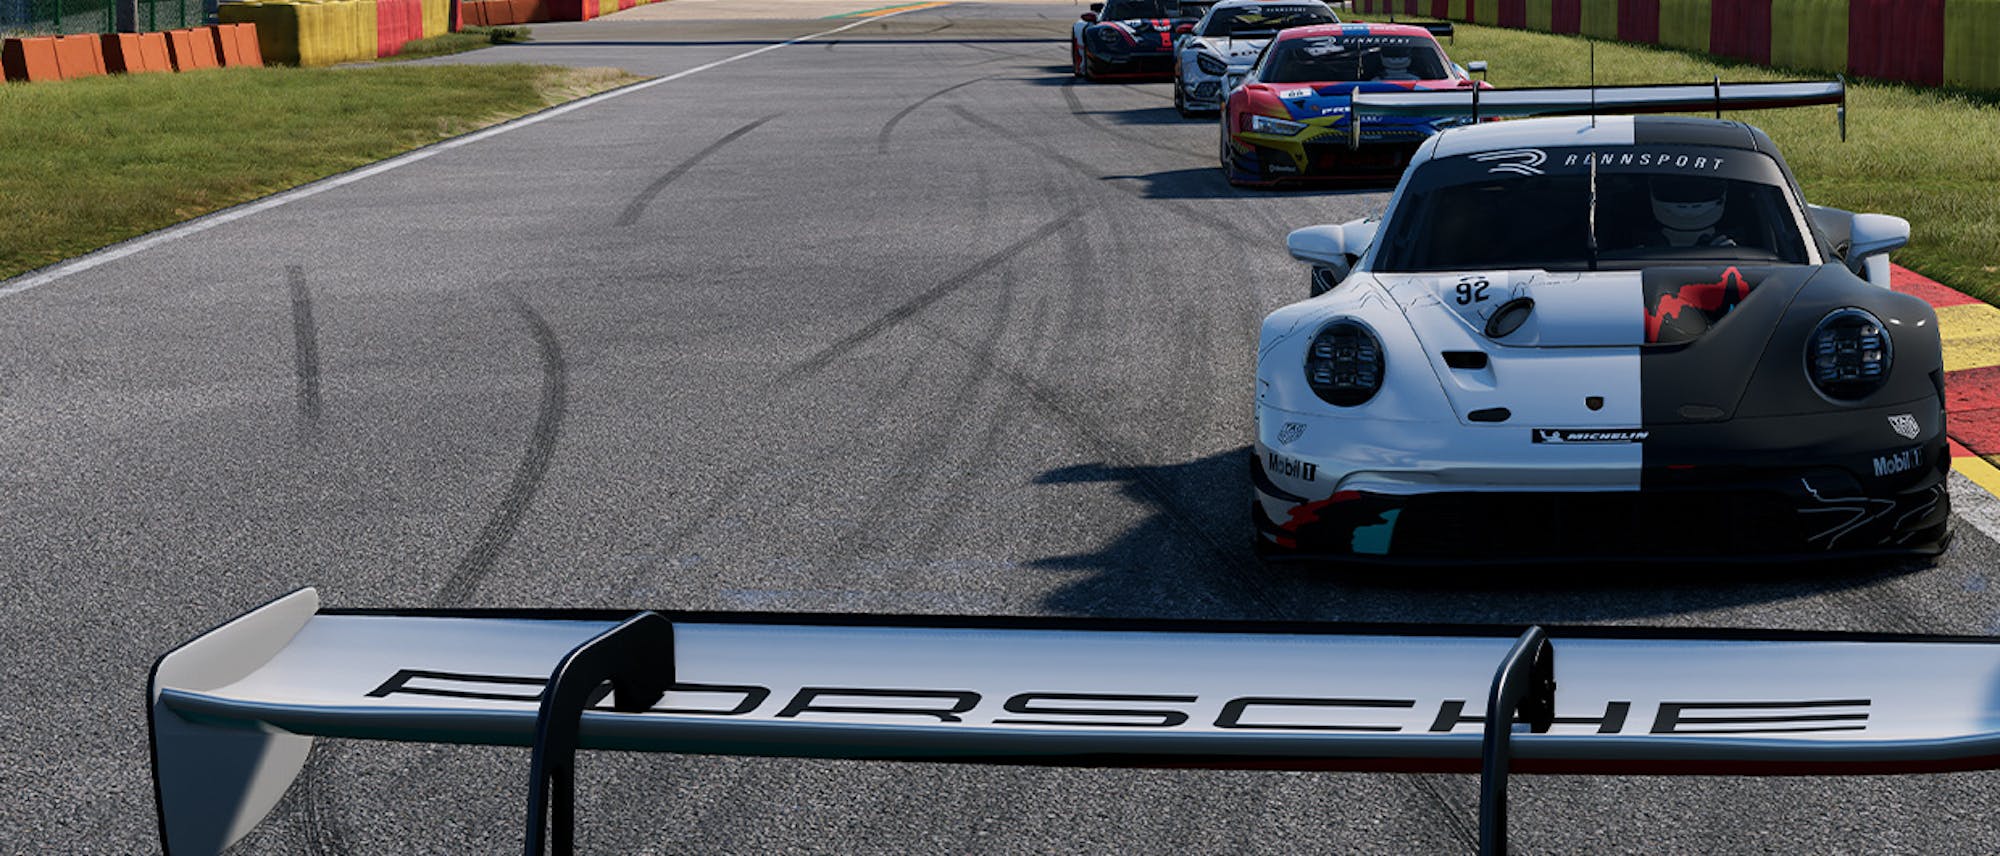 Virtual 911 GT3 R (992) race cars close-up